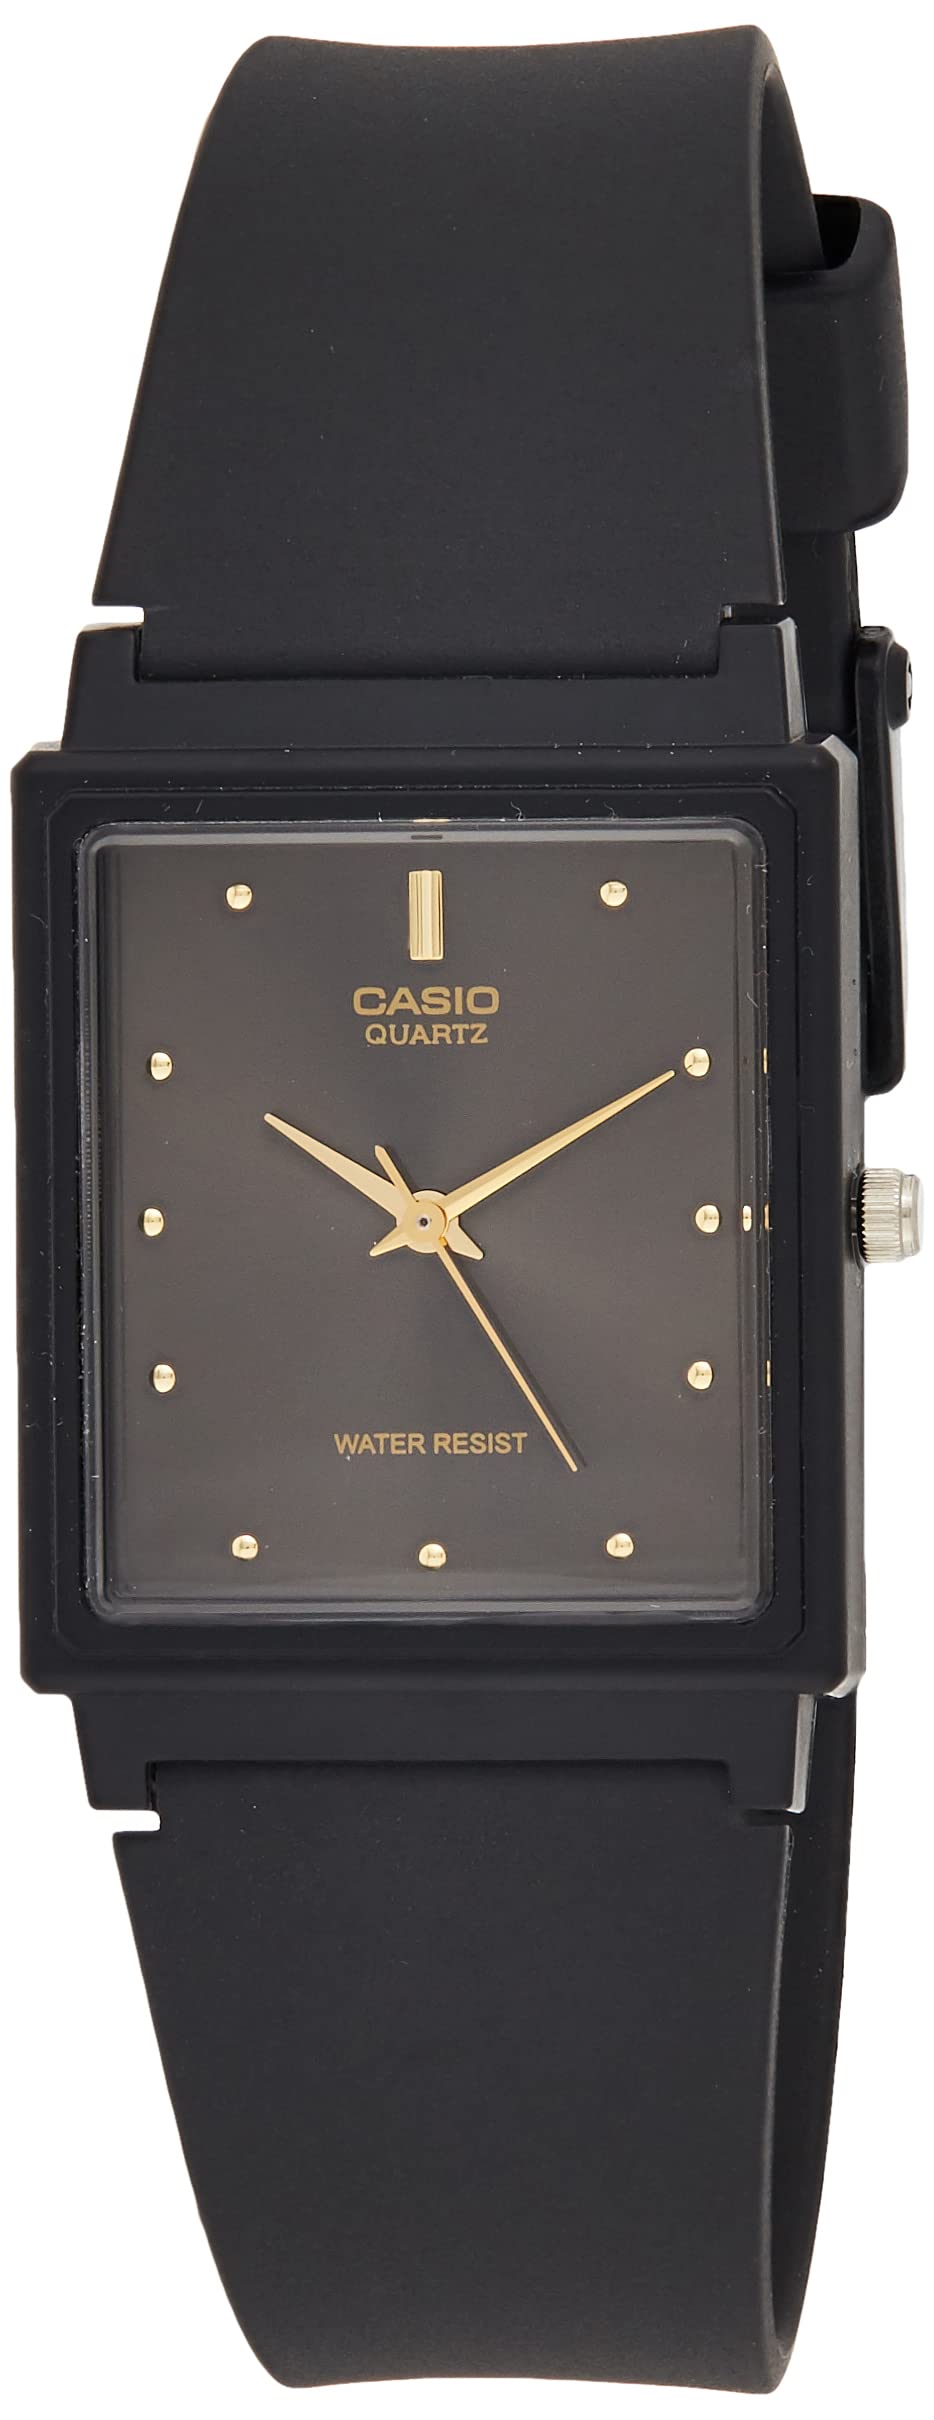 Casio Men's MQ38-1A Black Resin Analog Quartz Watch with Black Dial